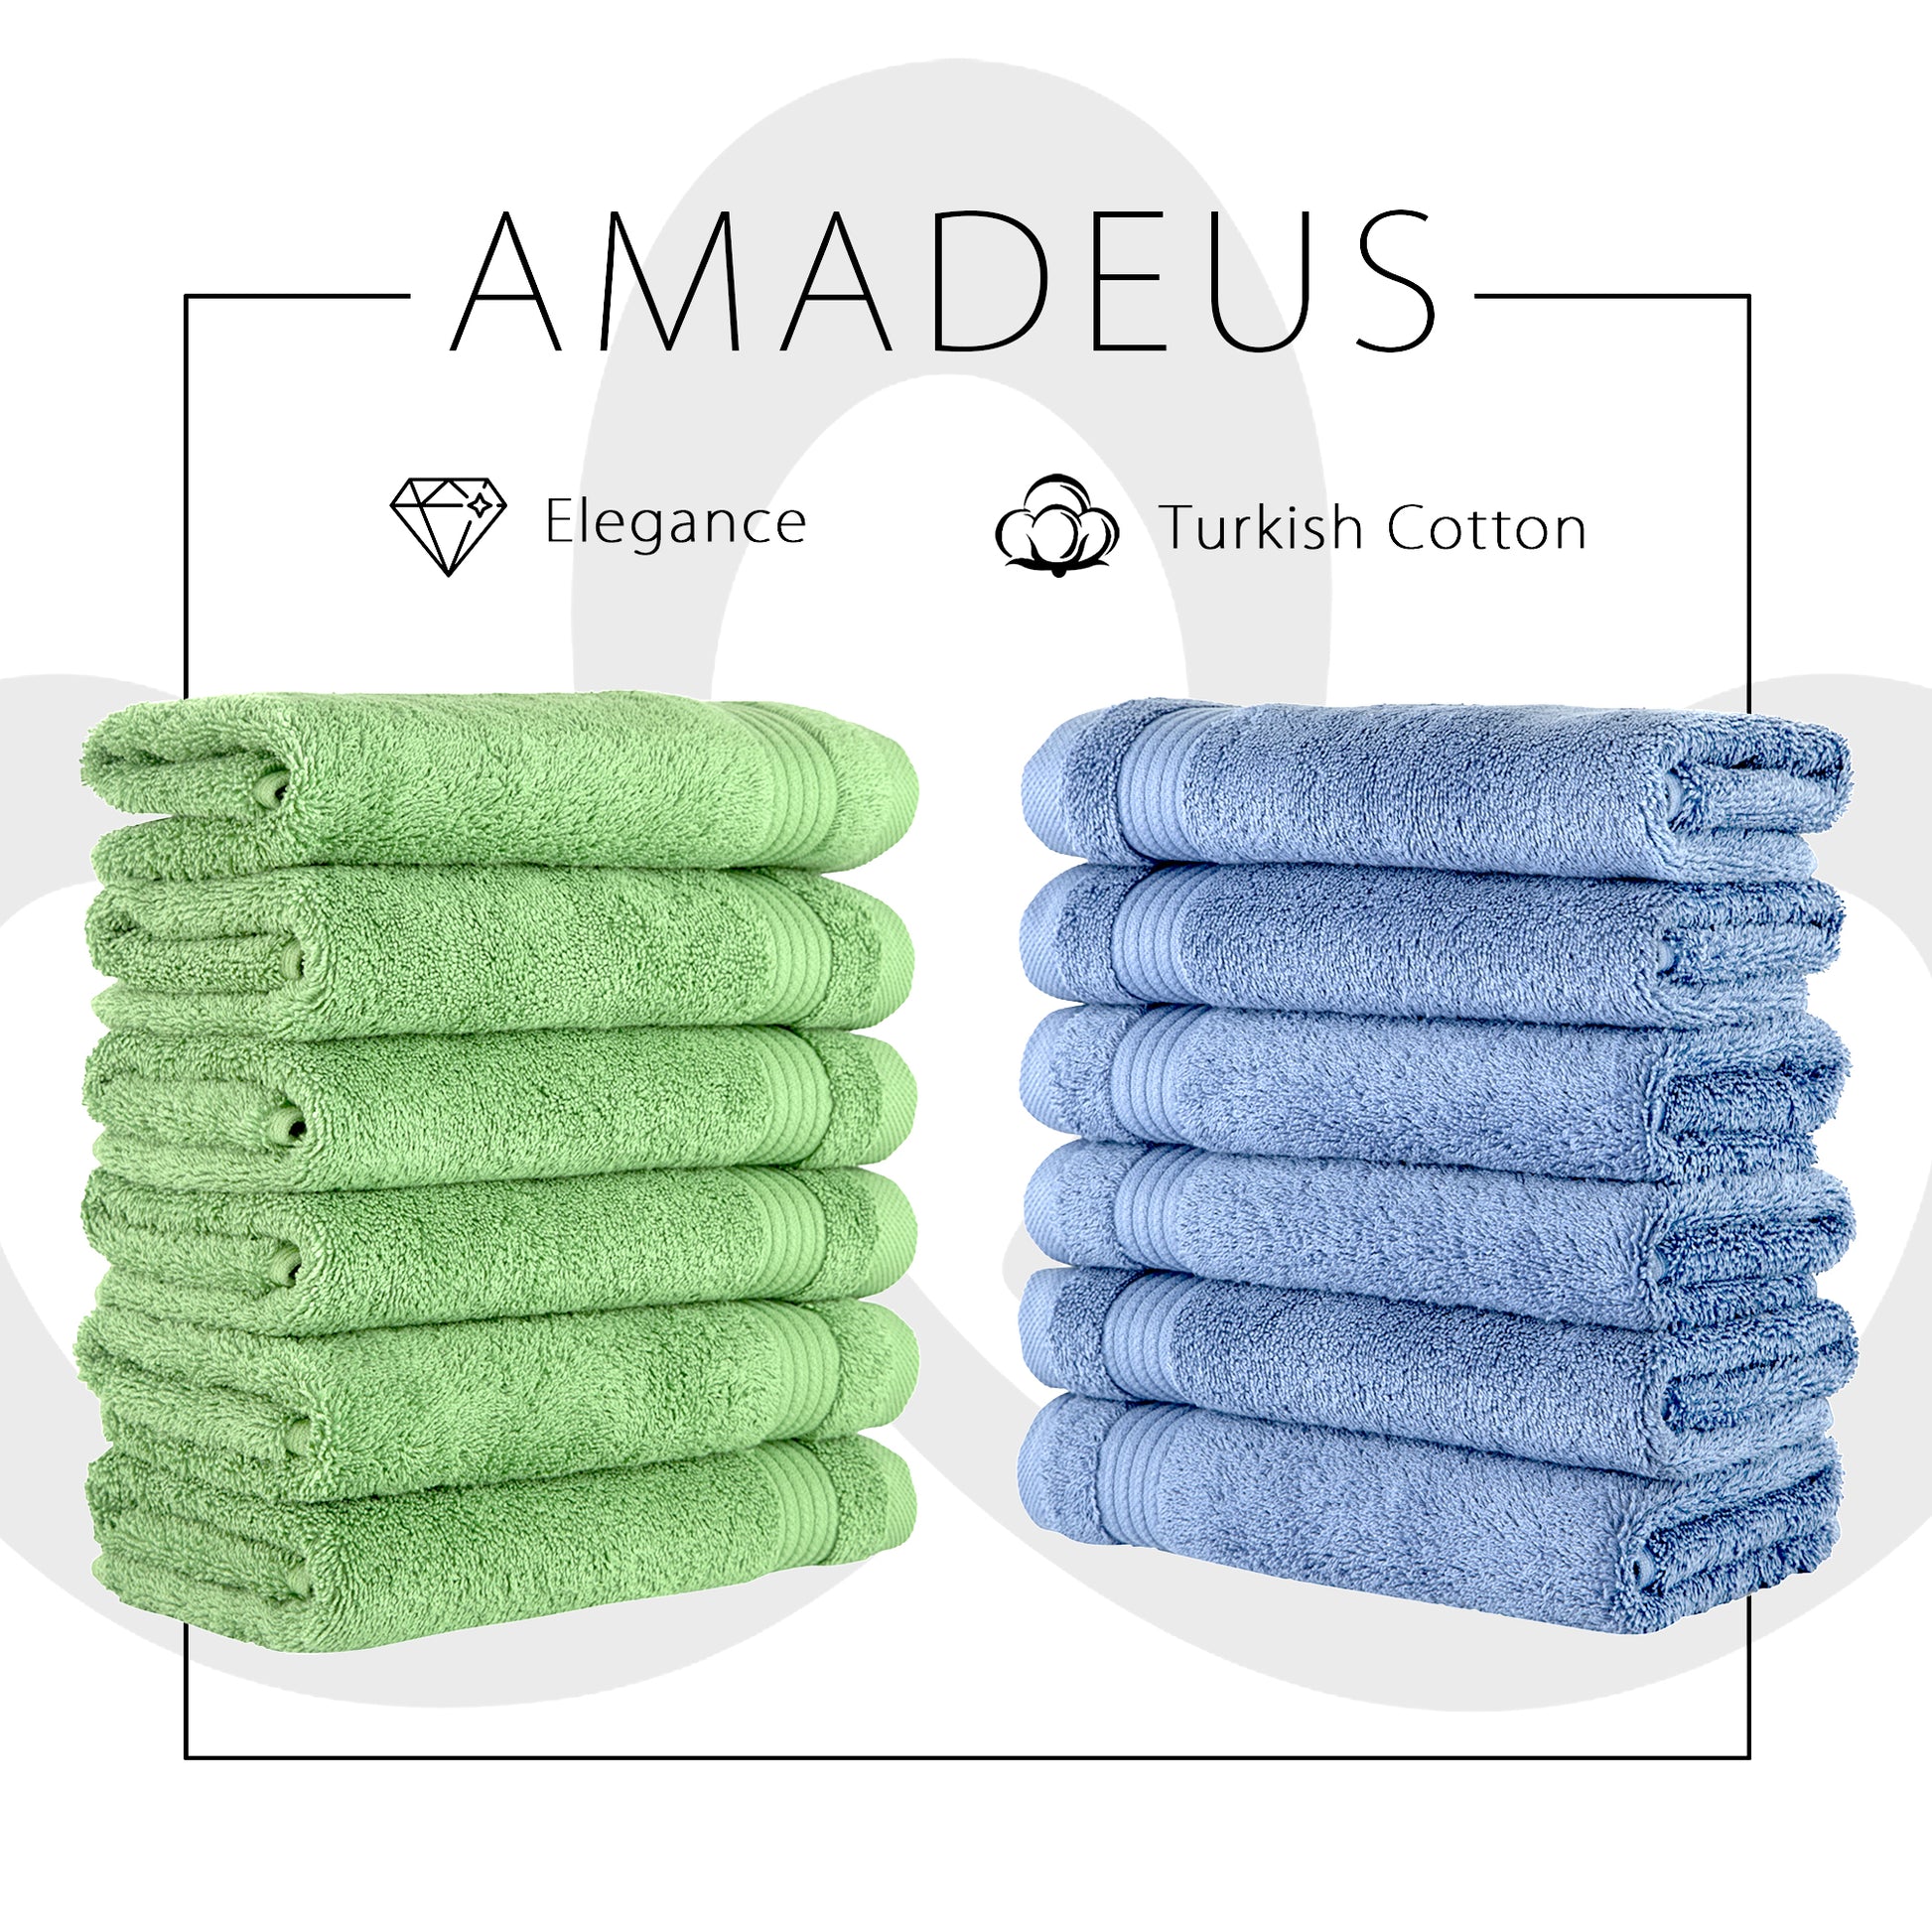 Amadeus Luxury Turkish Cotton Plush Hand Towels - 6 Pieces - Classic Turkish Towels